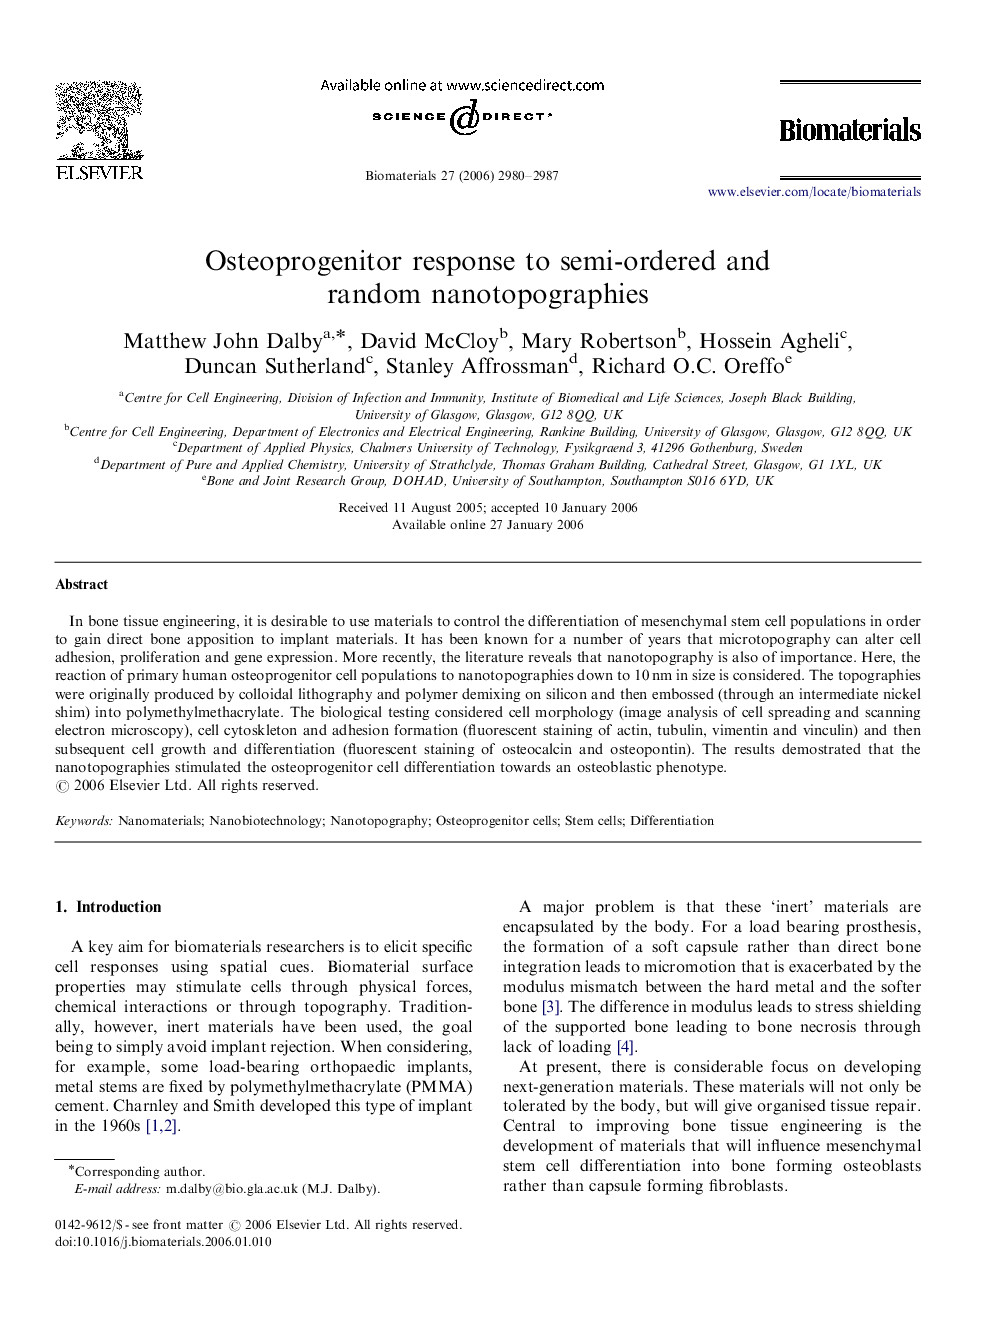 Osteoprogenitor response to semi-ordered and random nanotopographies